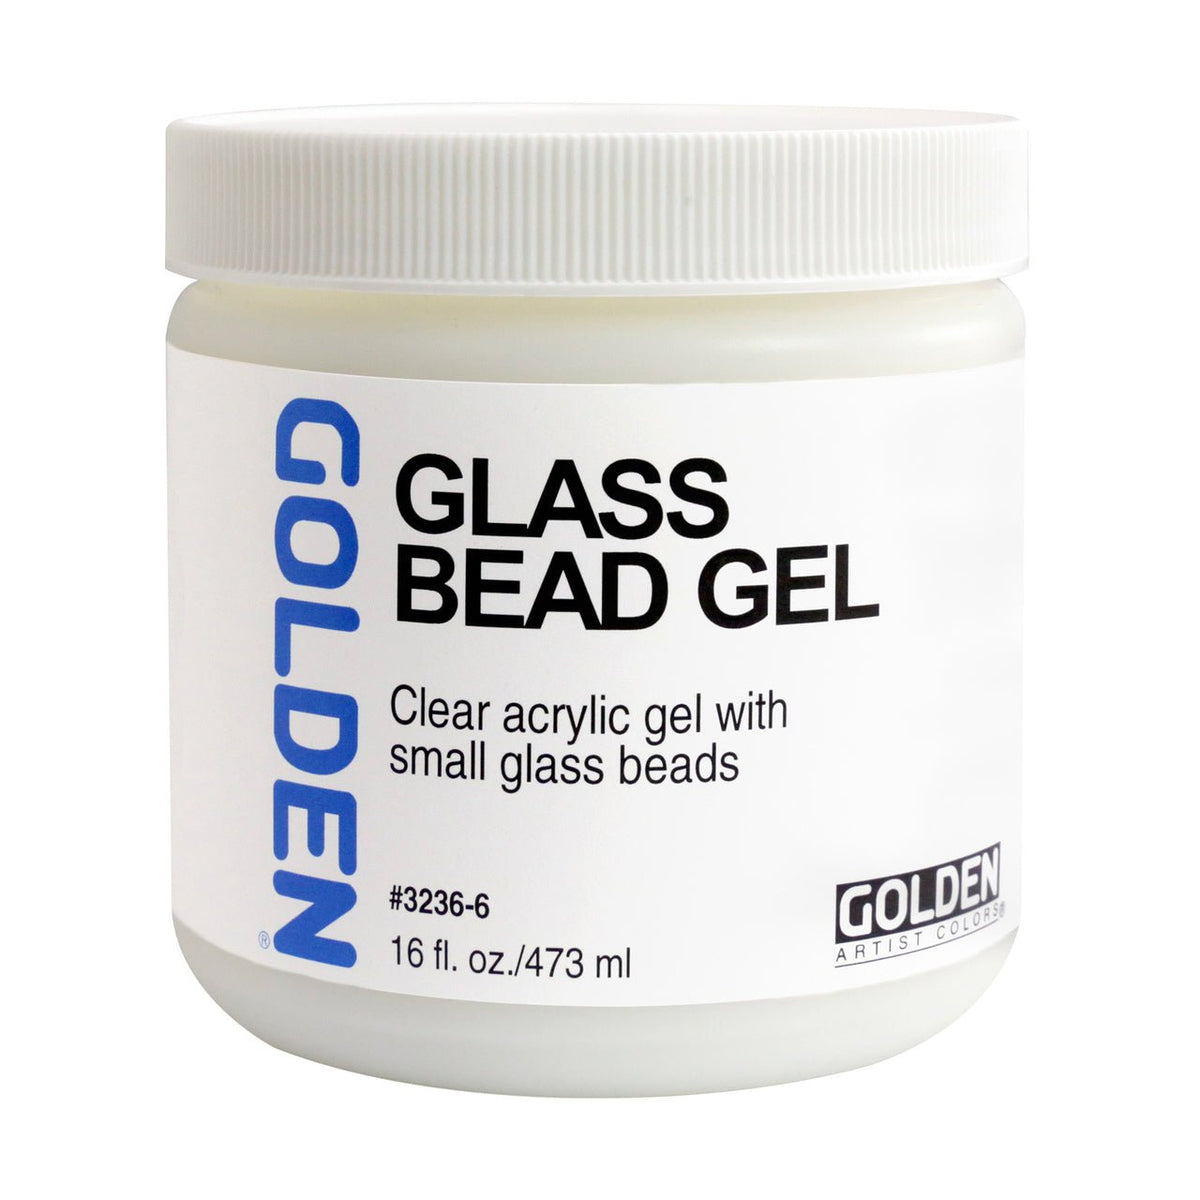 Golden Glass Bead Gel 16 oz - merriartist.com